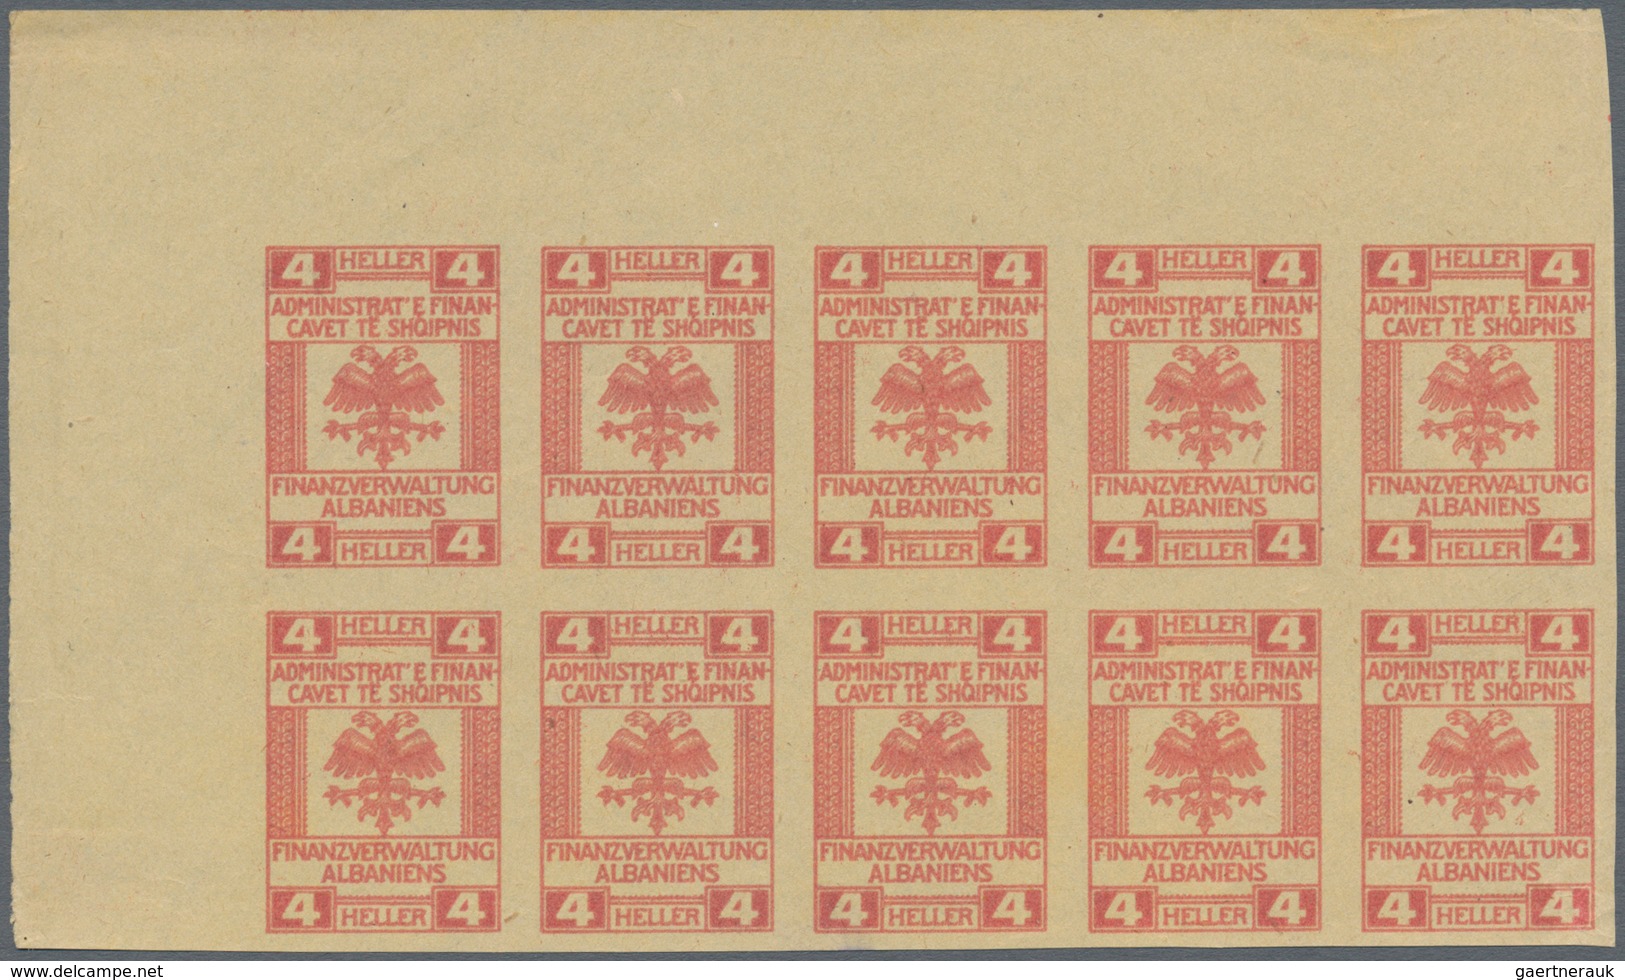 Albanien - Besonderheiten: 1919 appr.: Proofs for fiscal stamps with German inscript "FINANZVERWALTU